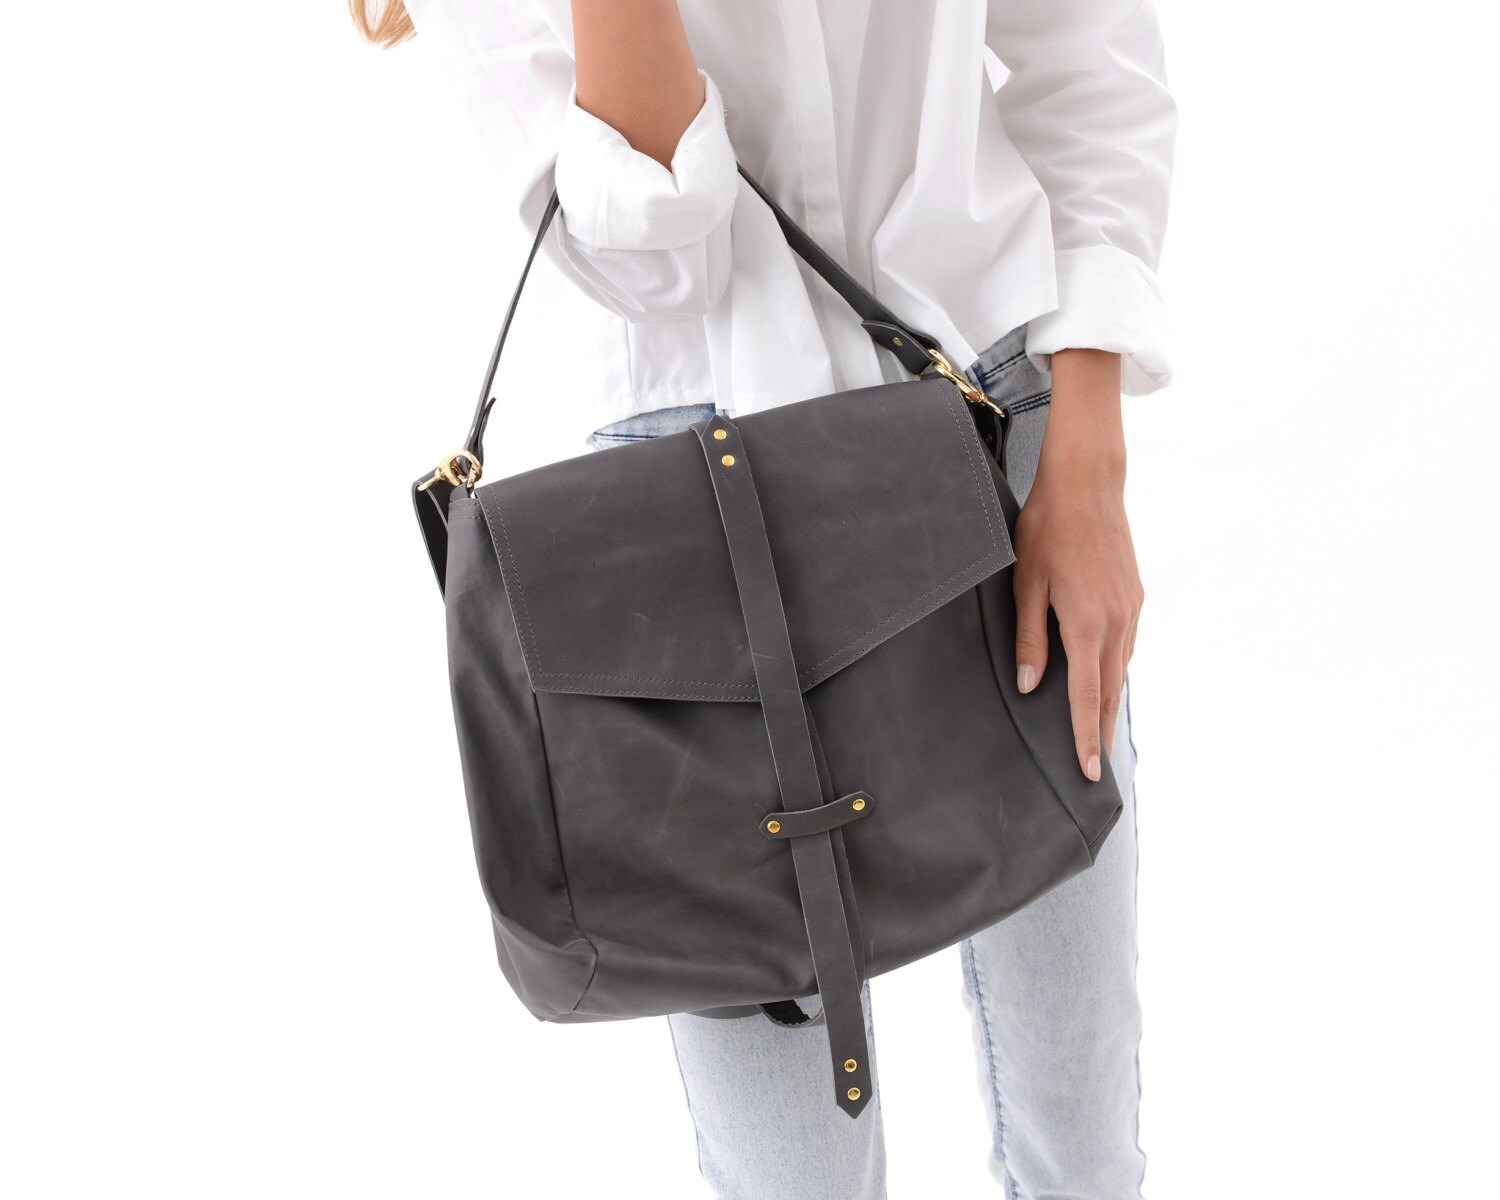 Over the Shoulder Handbag for Everyday Wear Leather Fashion | Etsy